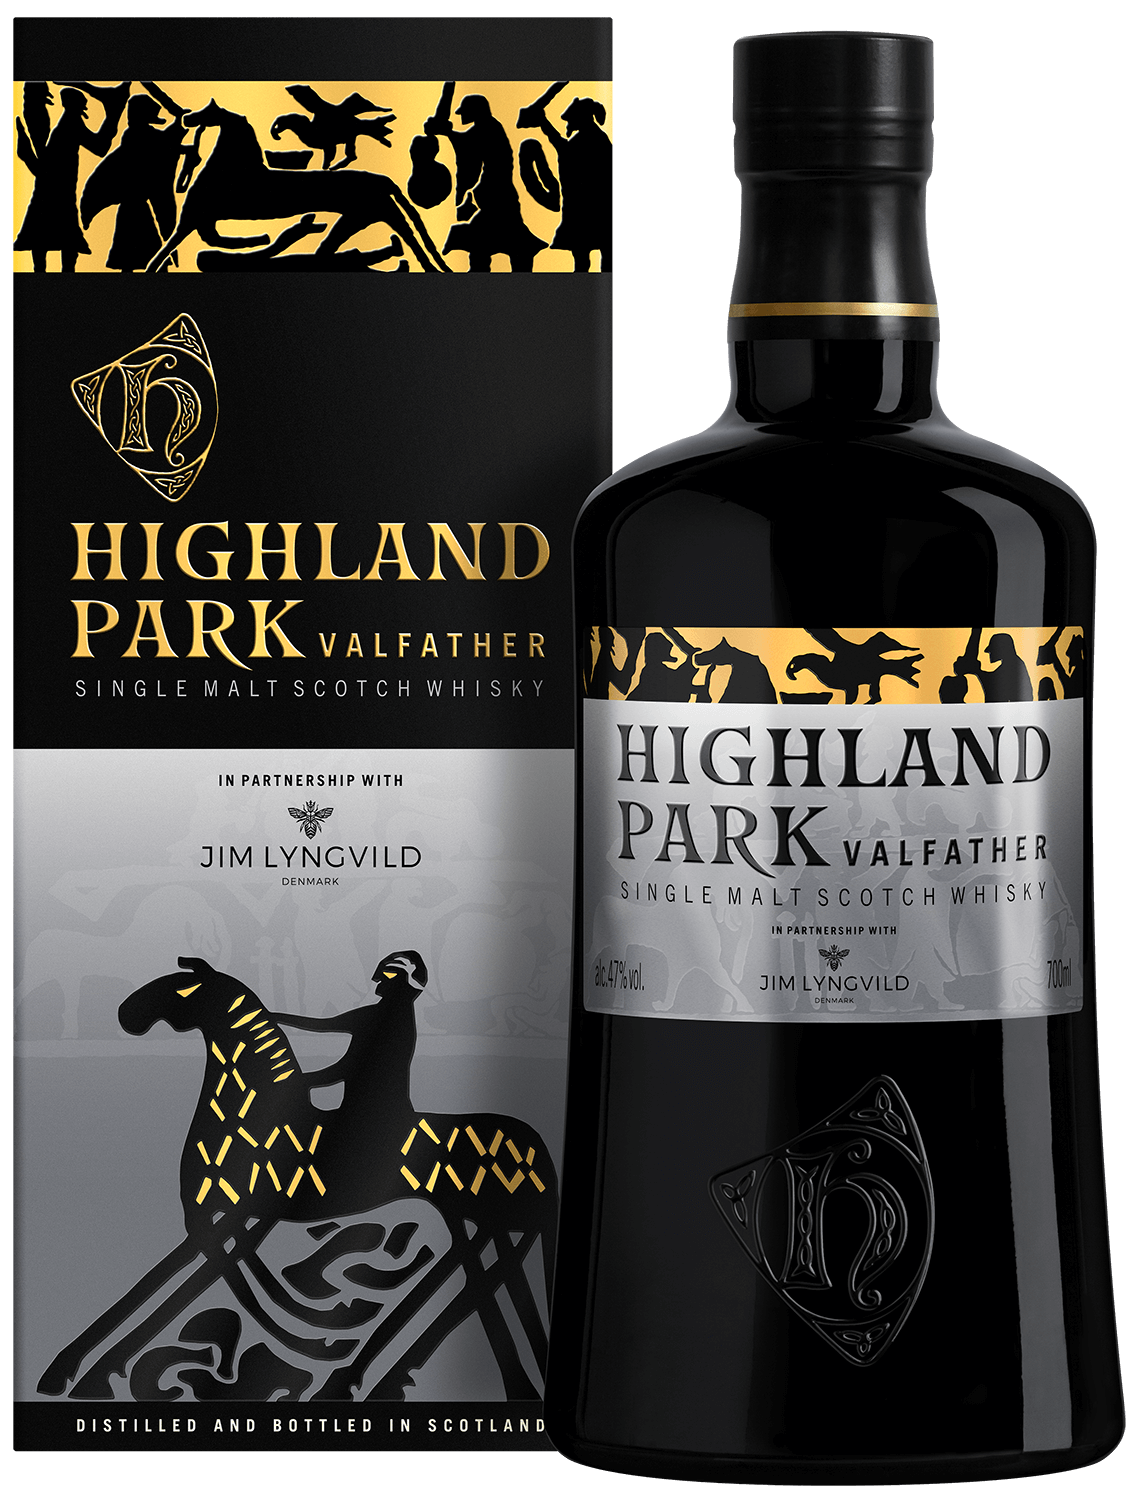 highland queen majesty single malt scotch whisky 16 y o gift box Highland Park Valfather single malt scotch whisky (gift box)